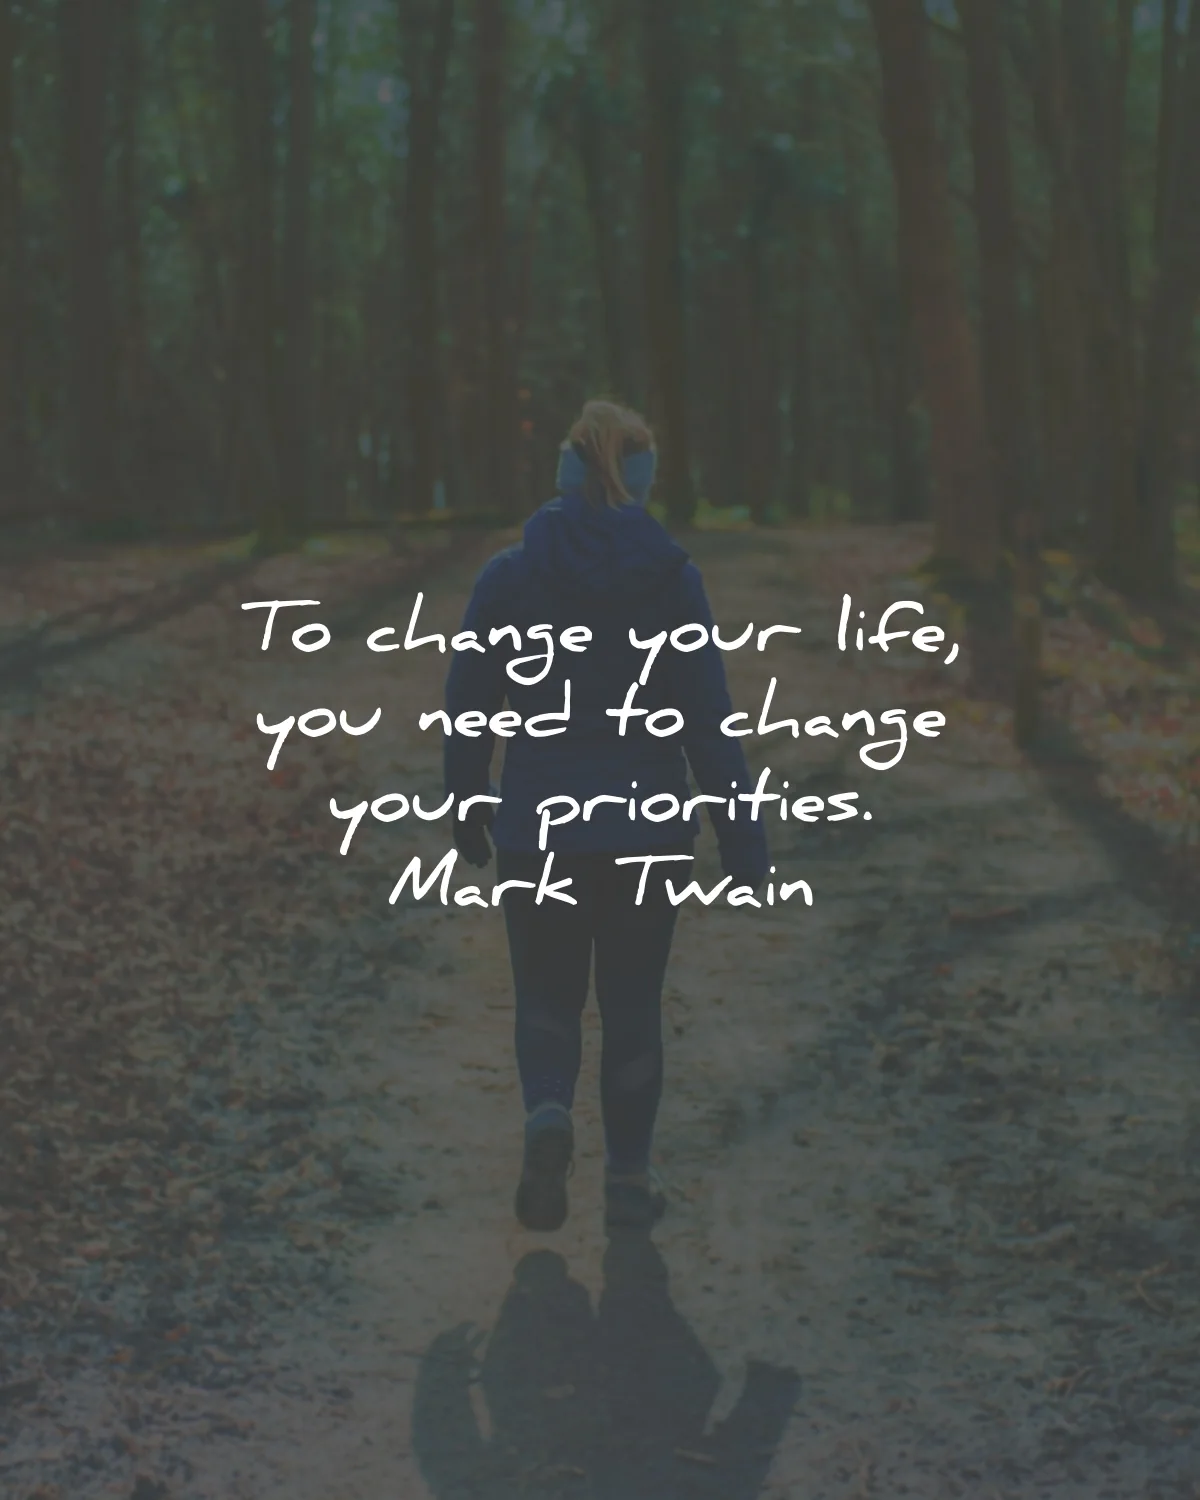 mark twain quotes change your life need priorities wisdom